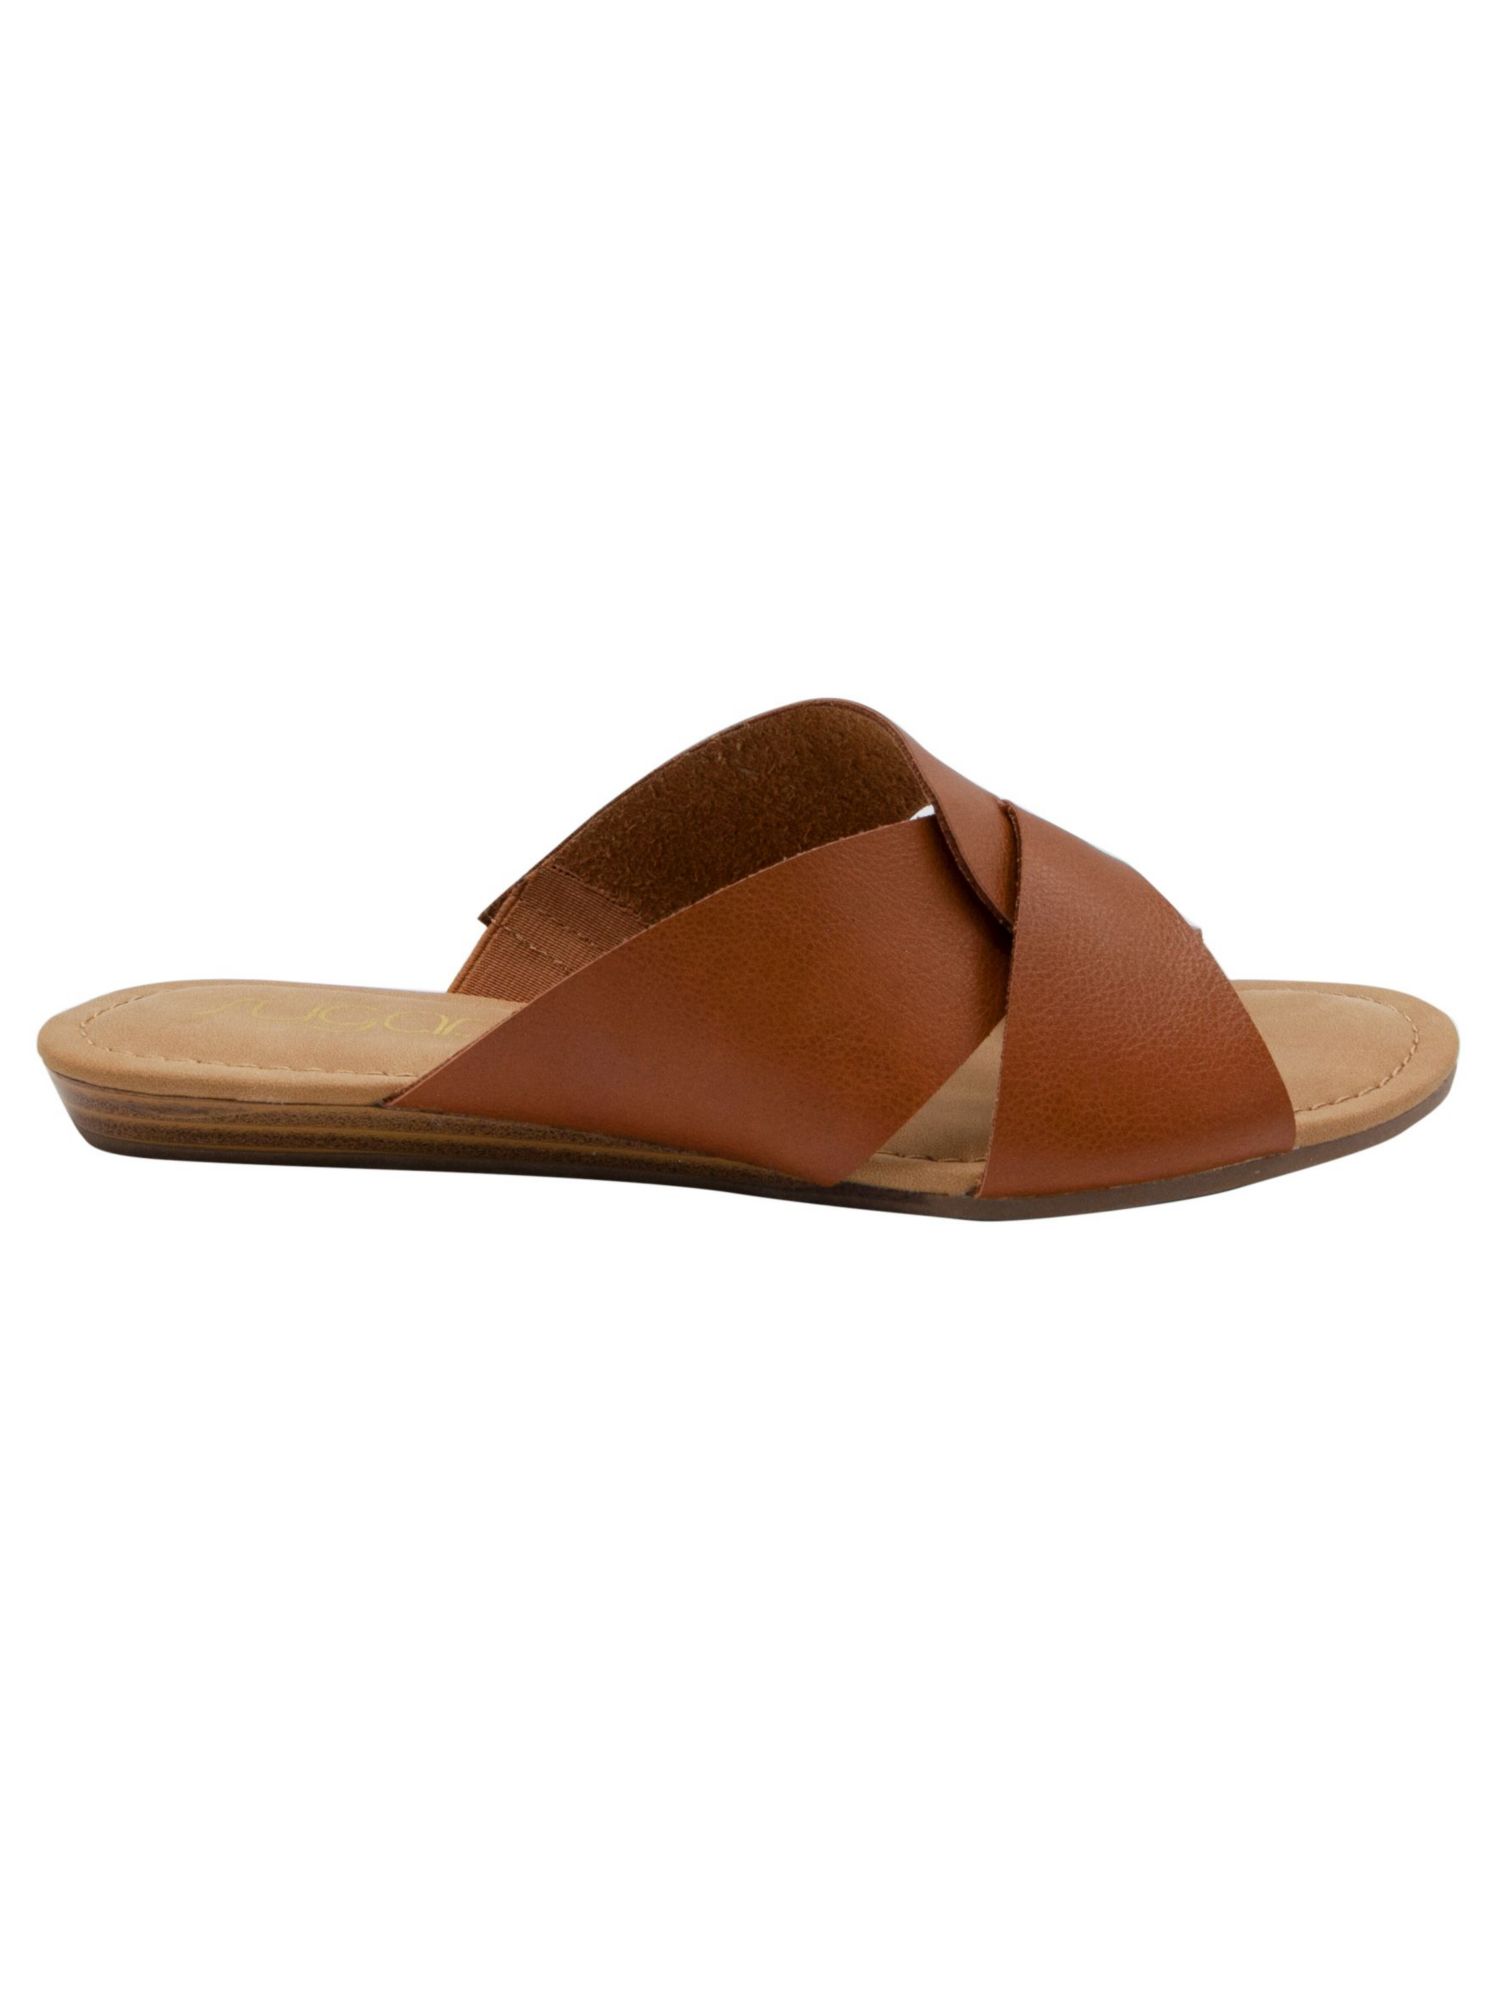 SUGAR Womens Brown 1/2 Heel Comfort Woven Olena Round Toe Block Heel Slip On Slide Sandals Shoes 6.5 M